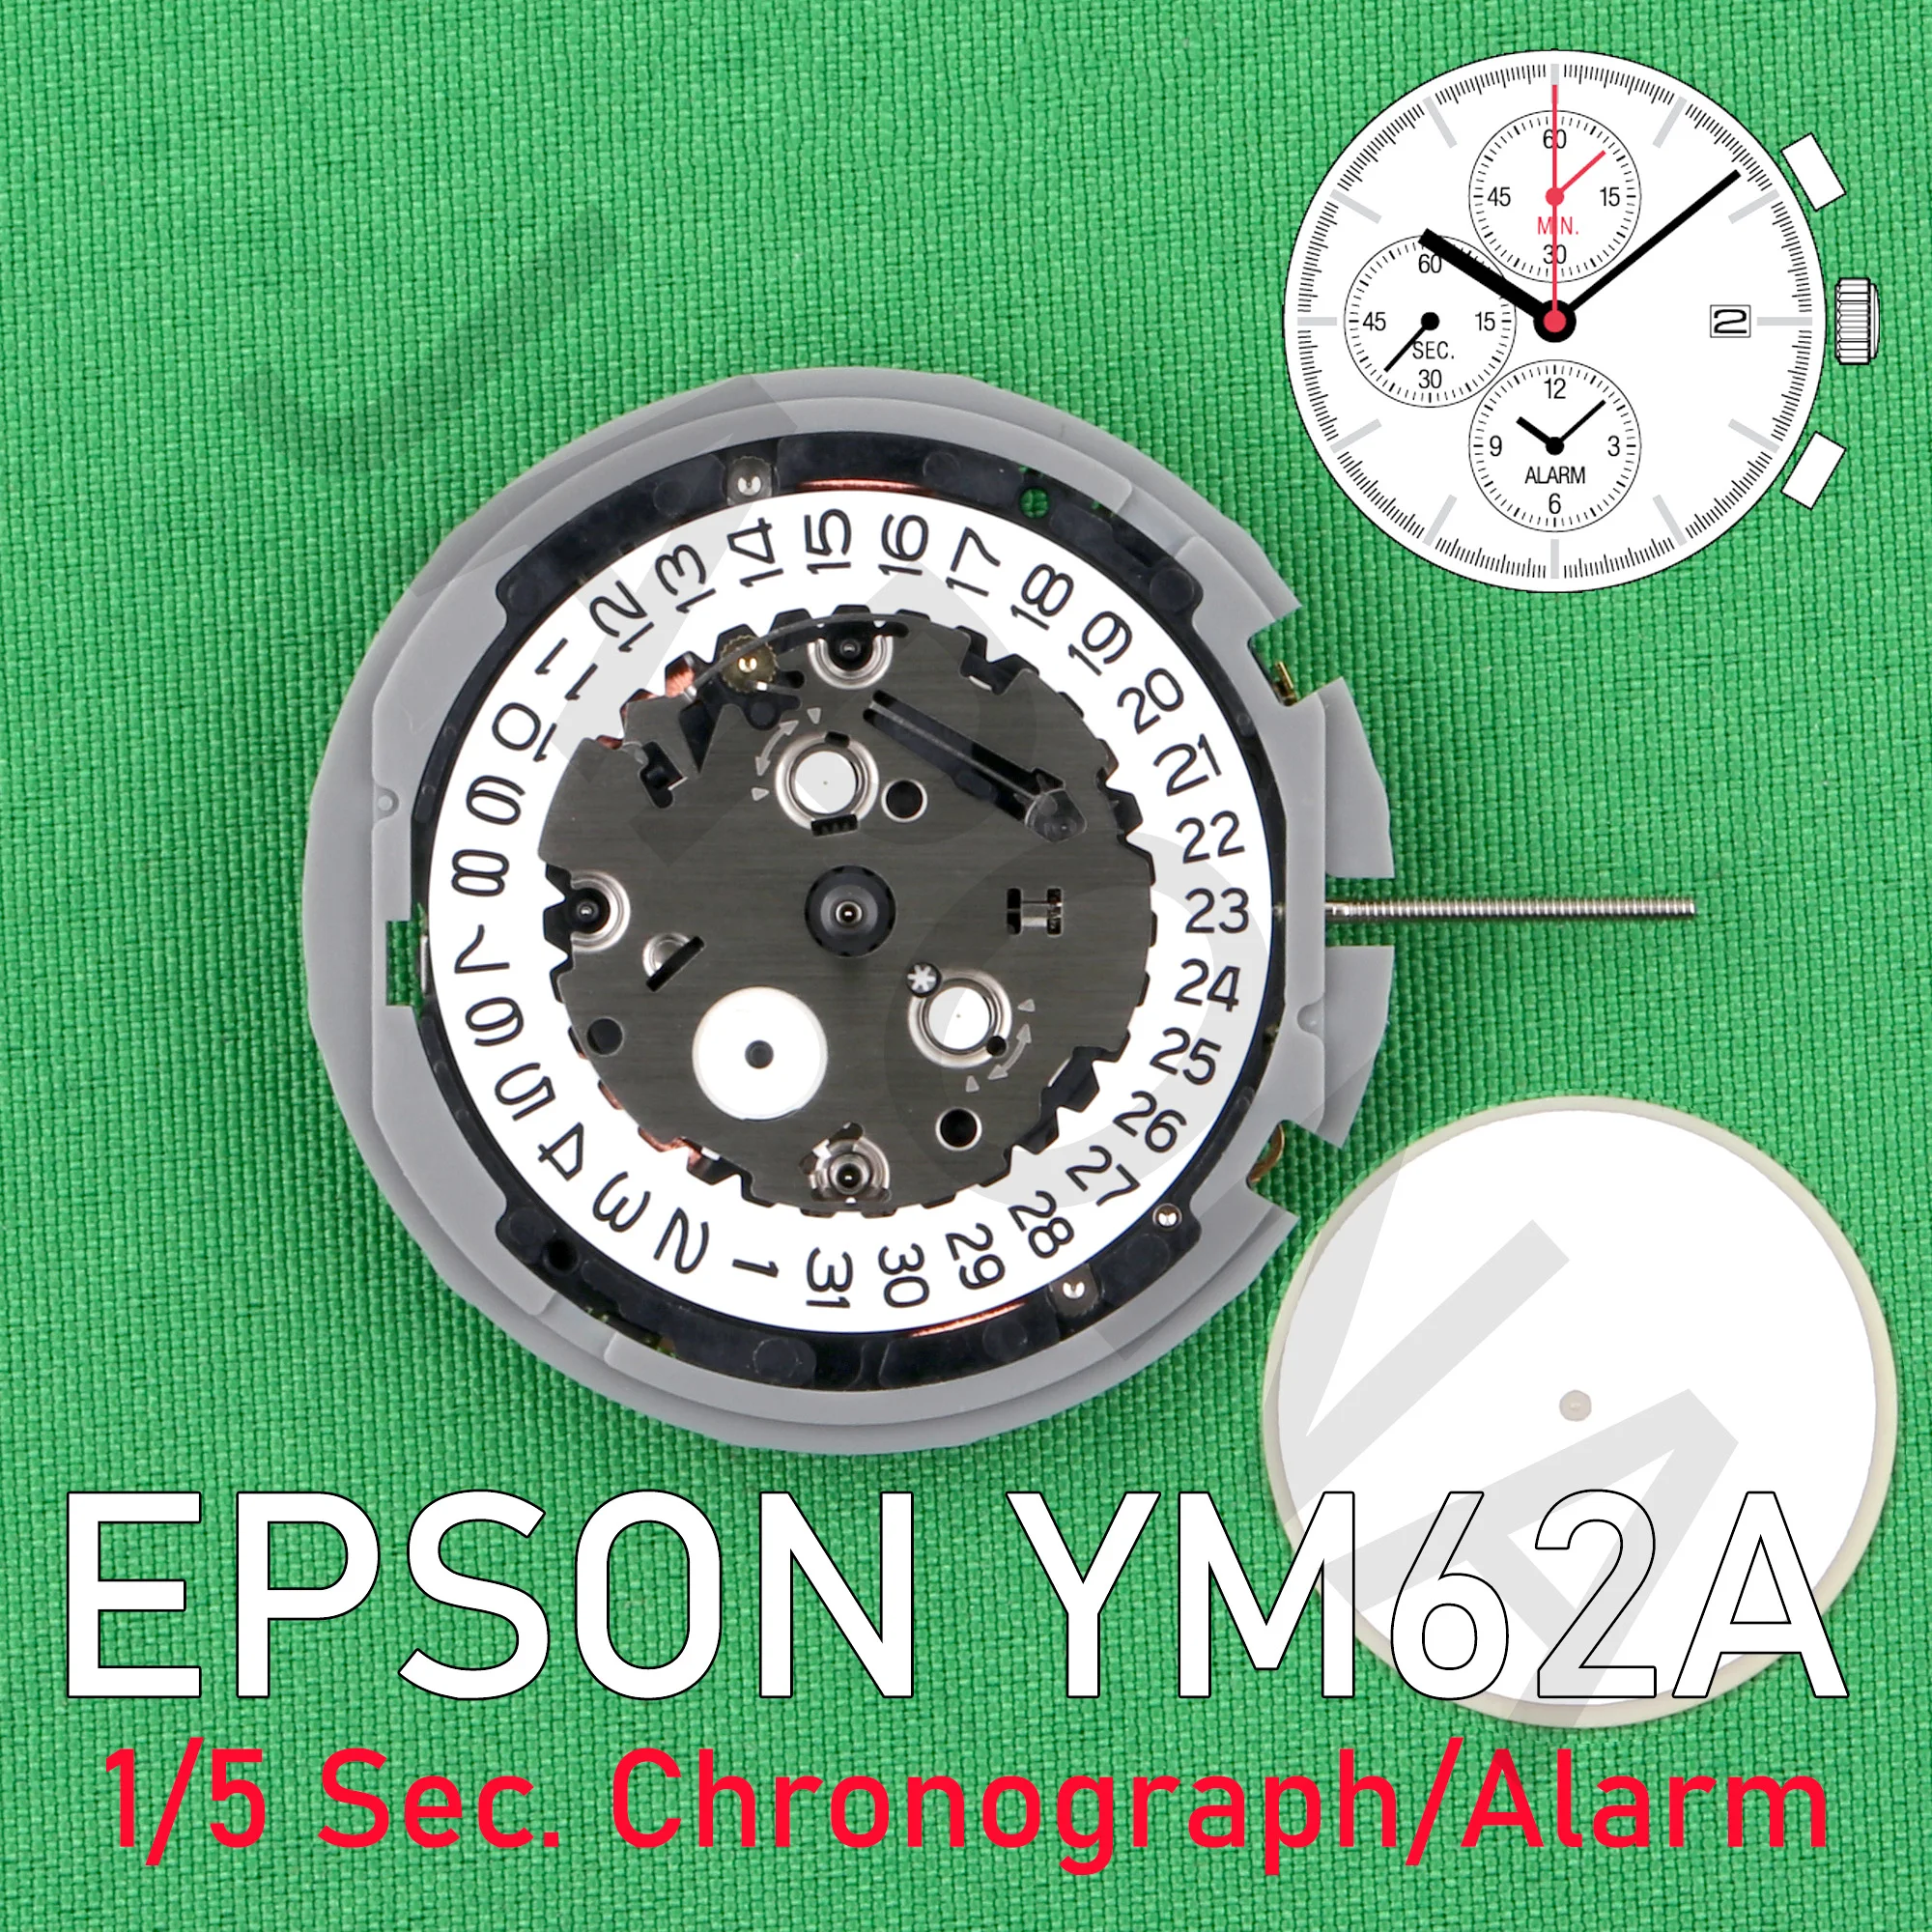 

YM62 movement japan EPSON YM62A movement small hands at 6.9.12 Analog Quartz 12''' Center second Chronograph Movement Alarm